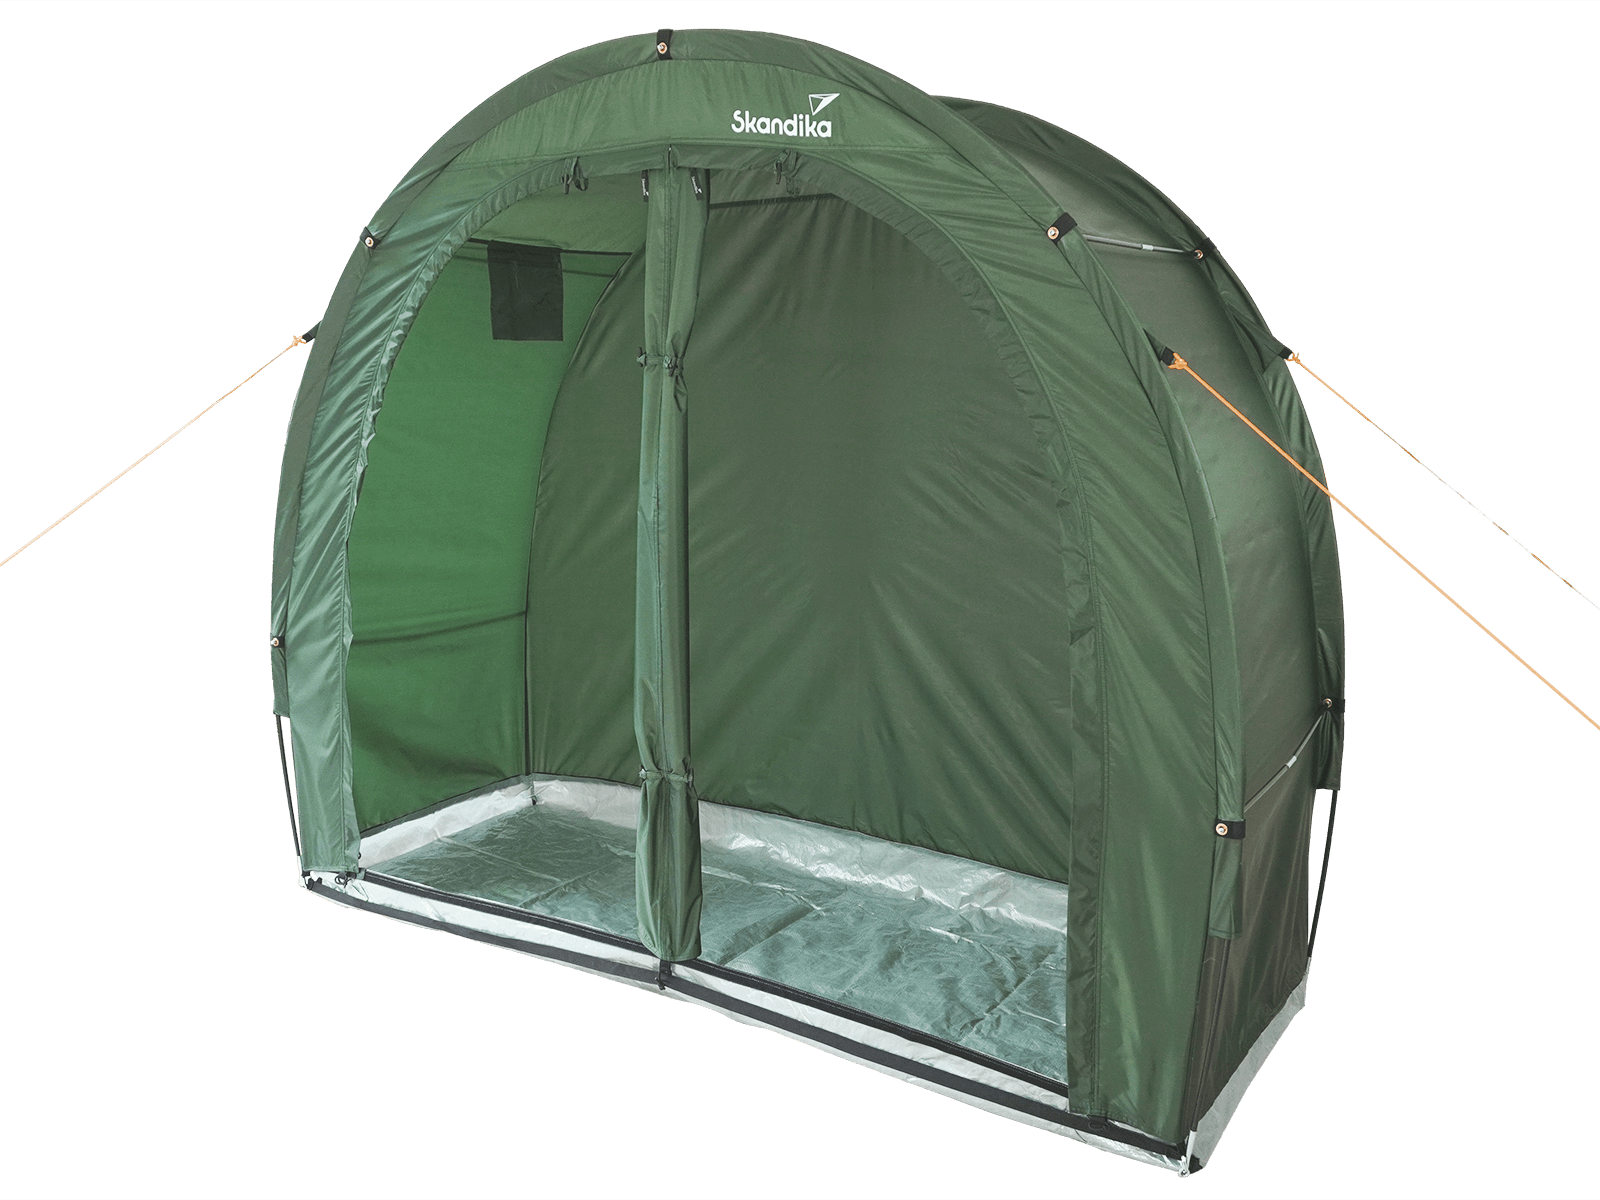 Outdoor Zelt Camping Tasche Beutel Heringe Aufbewahrung Utensilien Kleinkram 